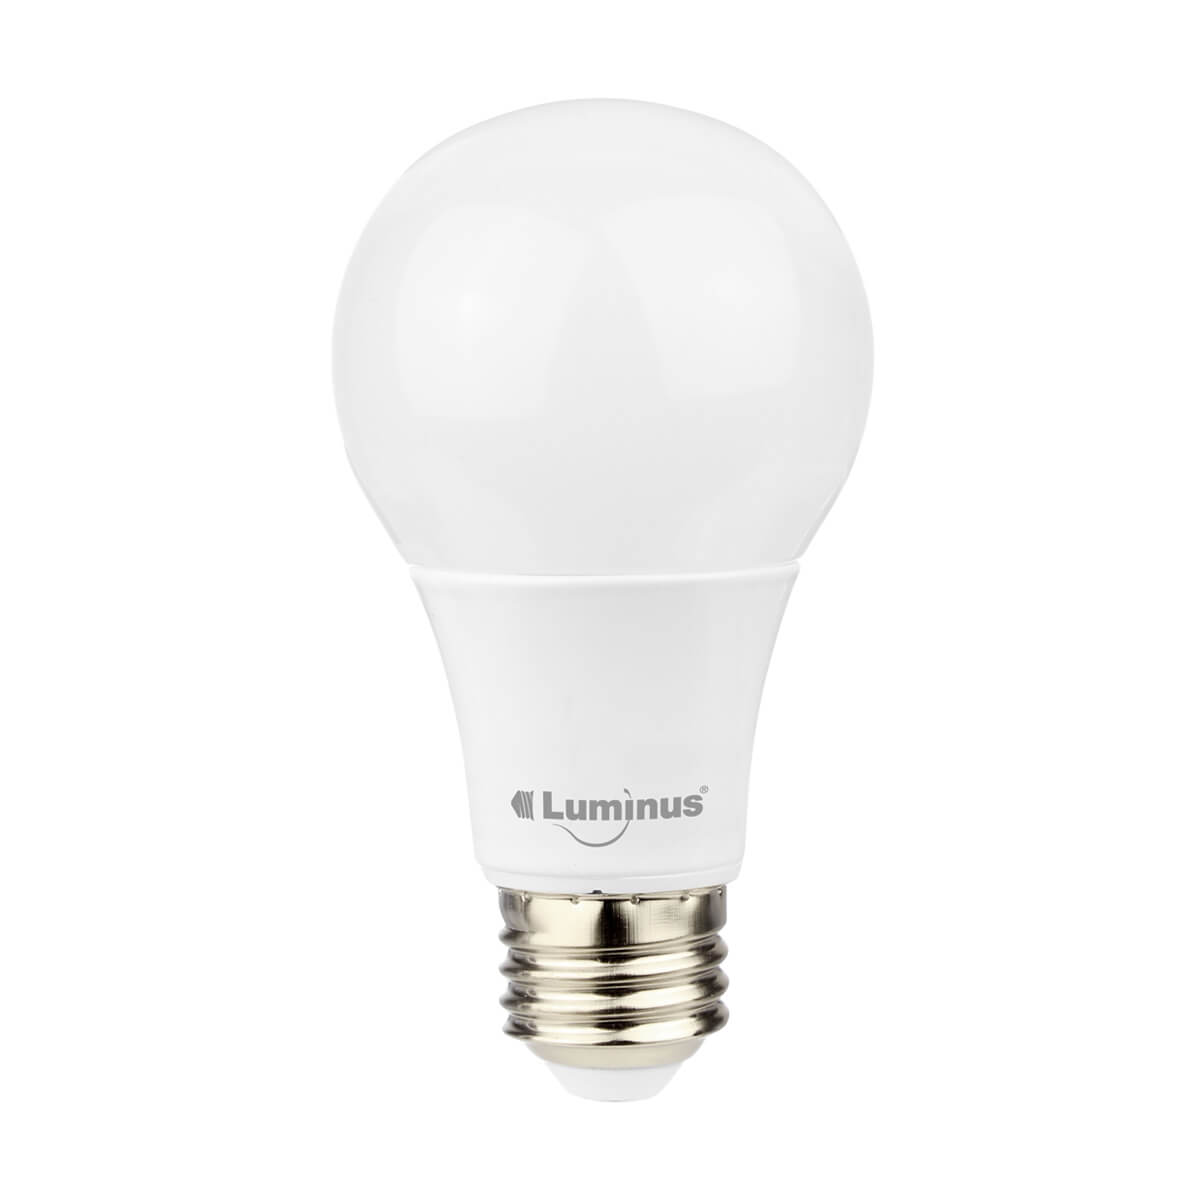 Luminus LED 9W 2700K A19 ND - 2 Pack